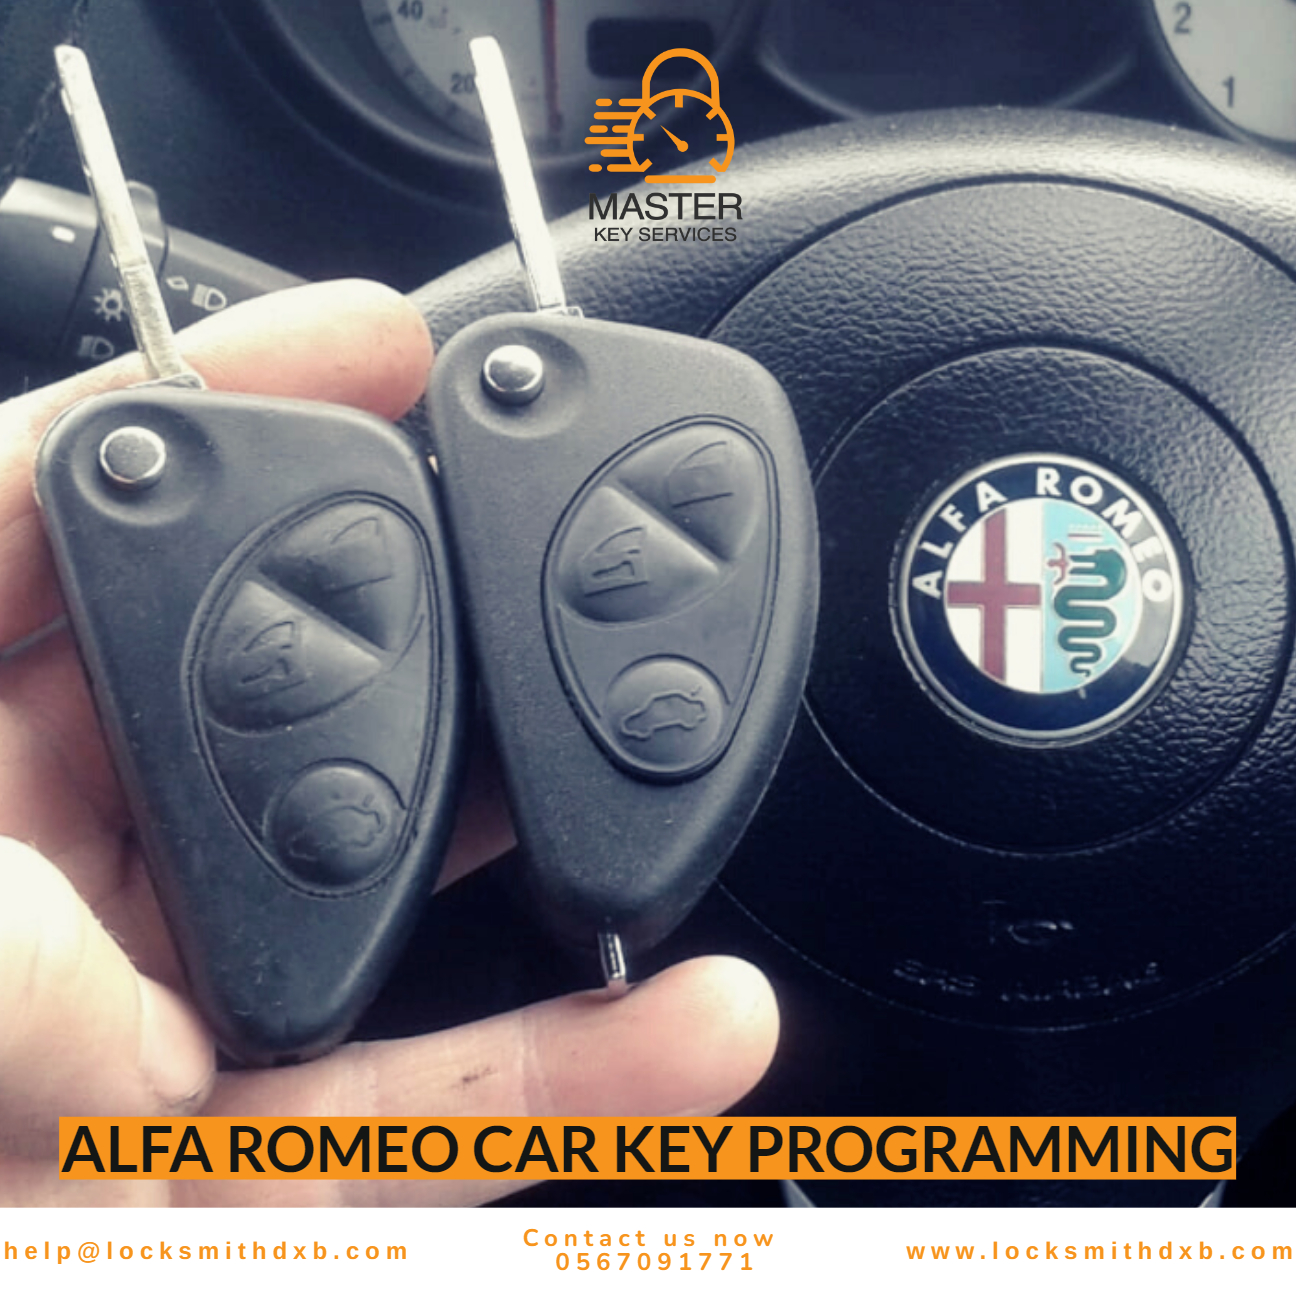 Alfa Romeo car key programming